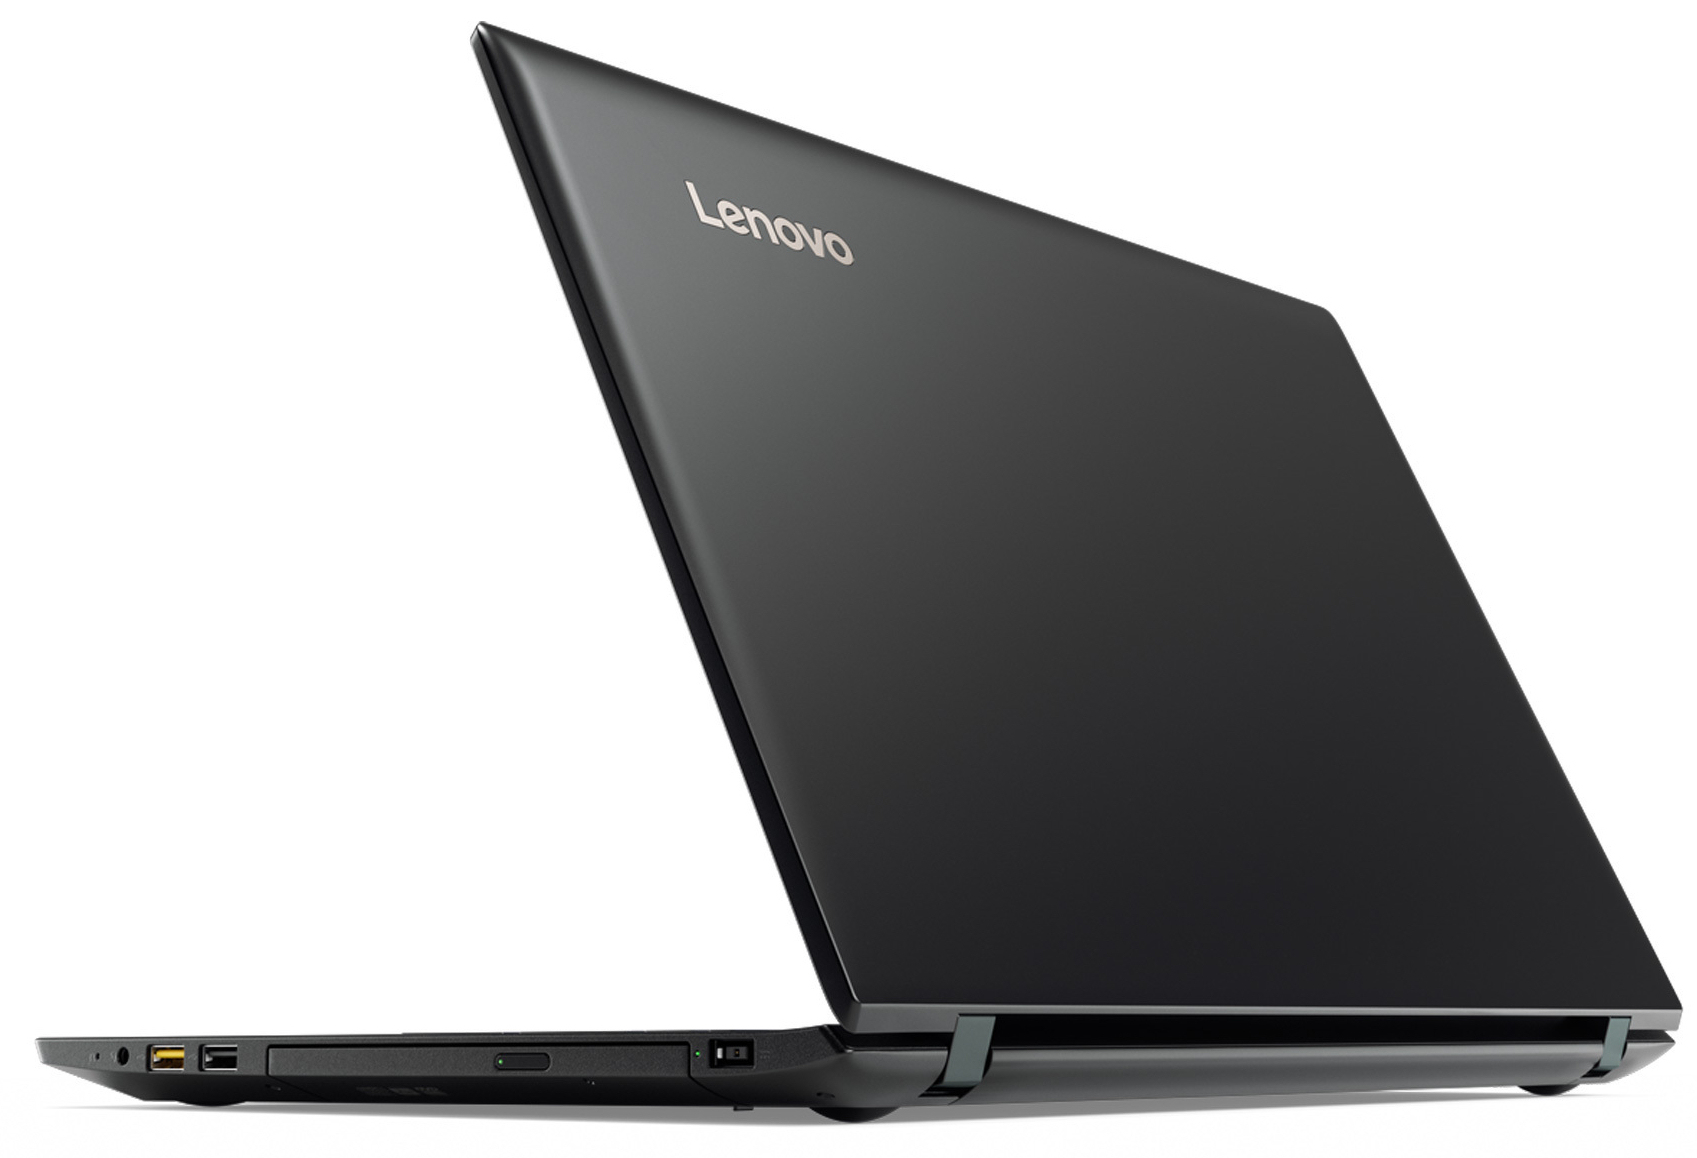 Lenovo V510-15IKB (7200U, Full-HD) Laptop Review - NotebookCheck 